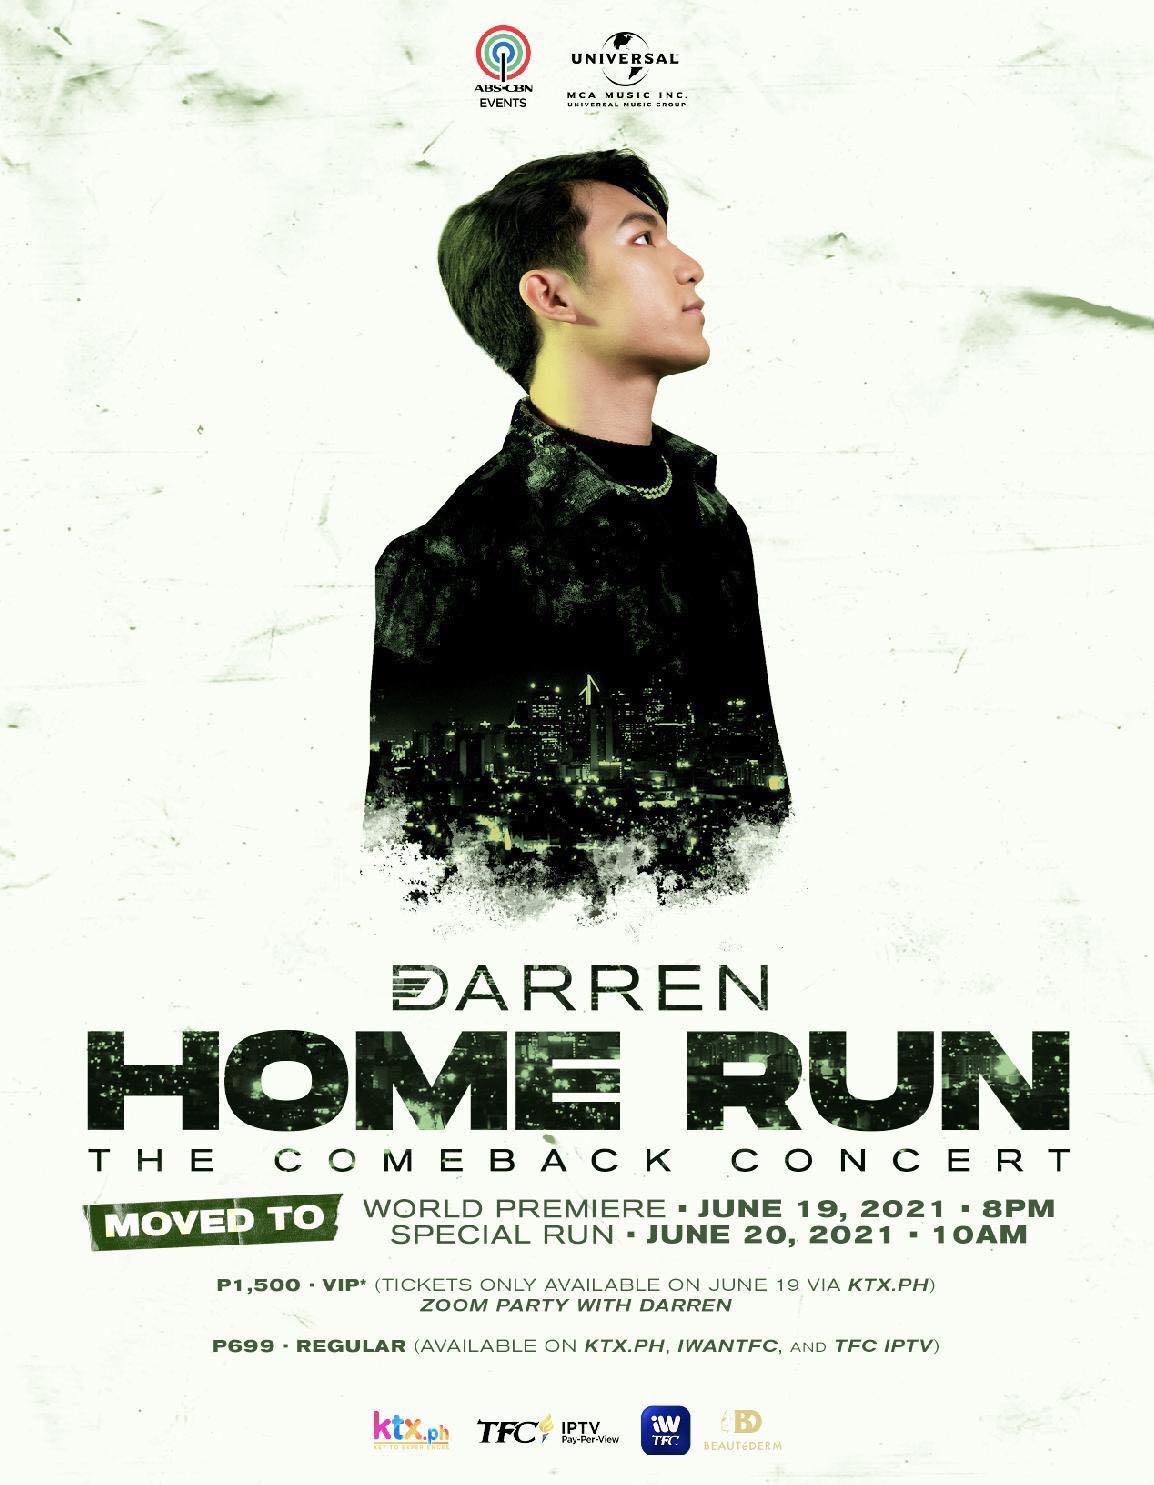 Darren Espanto Home run comeback concert